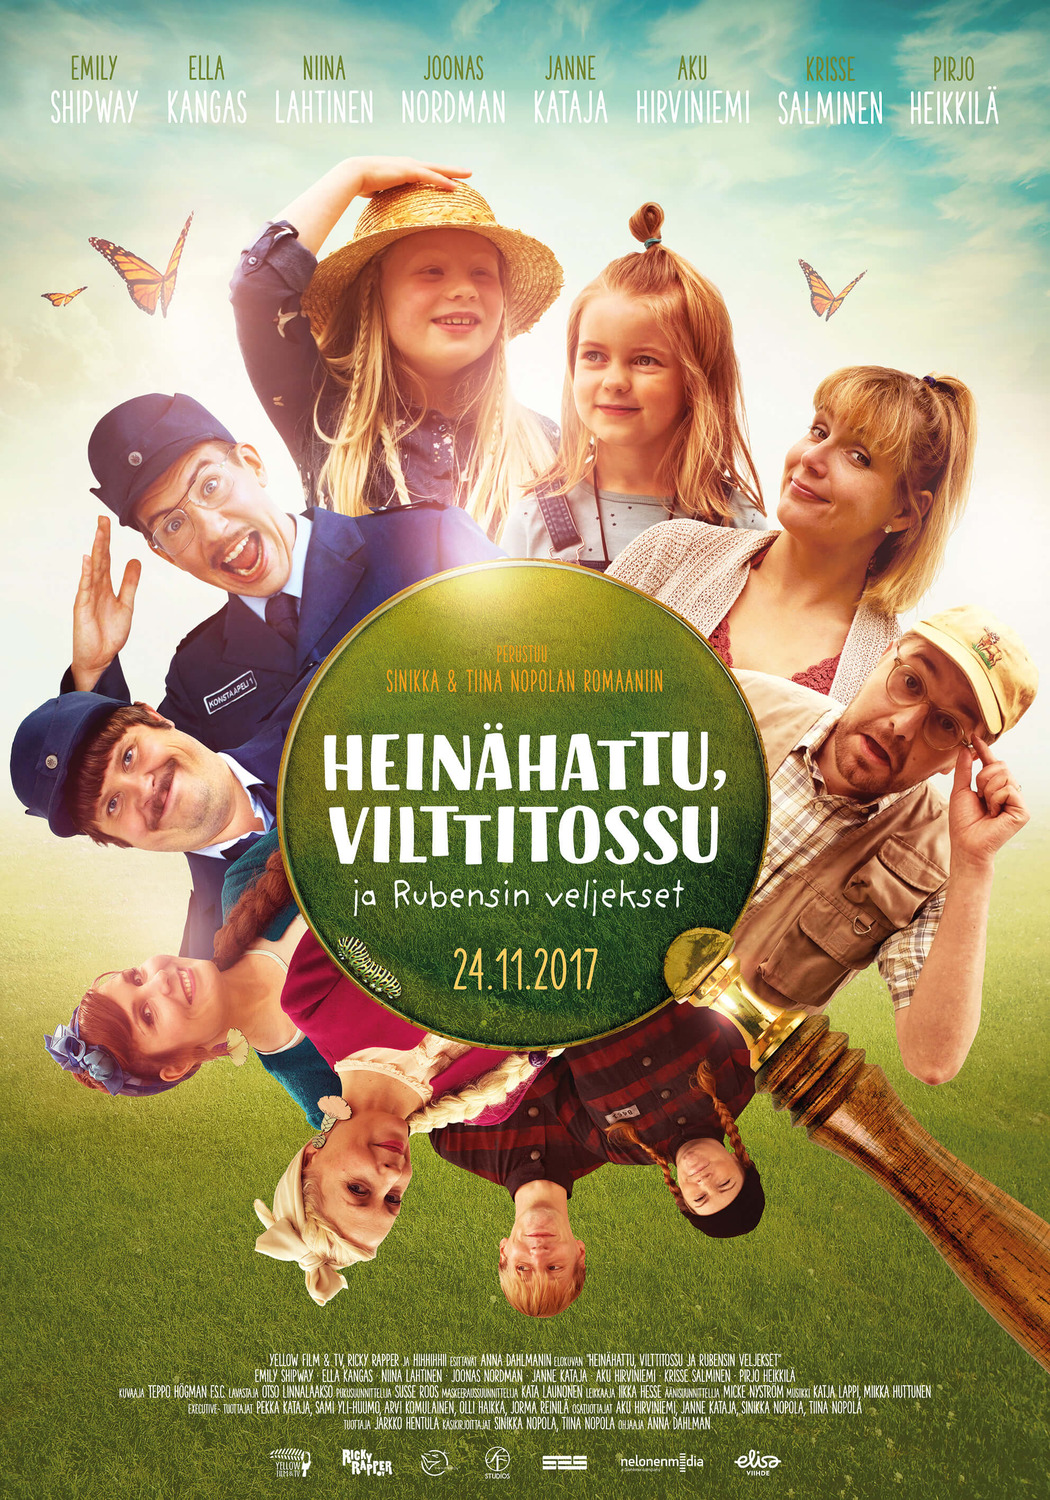 Extra Large Movie Poster Image for Heinähattu, Vilttitossu ja Rubensin veljekset 